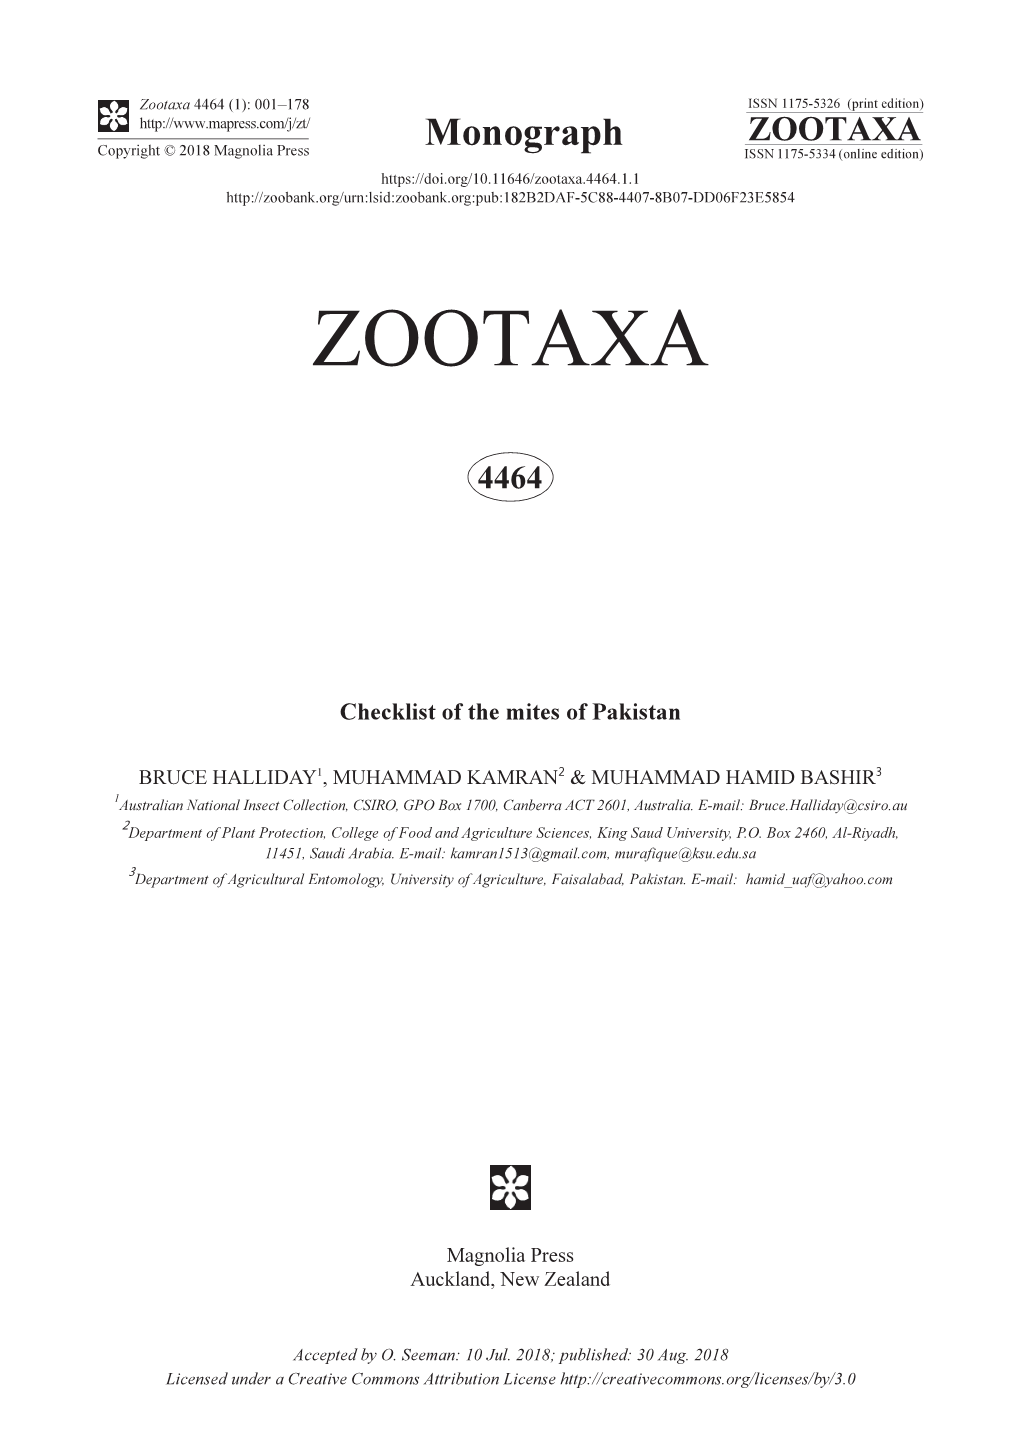 Checklist of the Mites of Pakistan